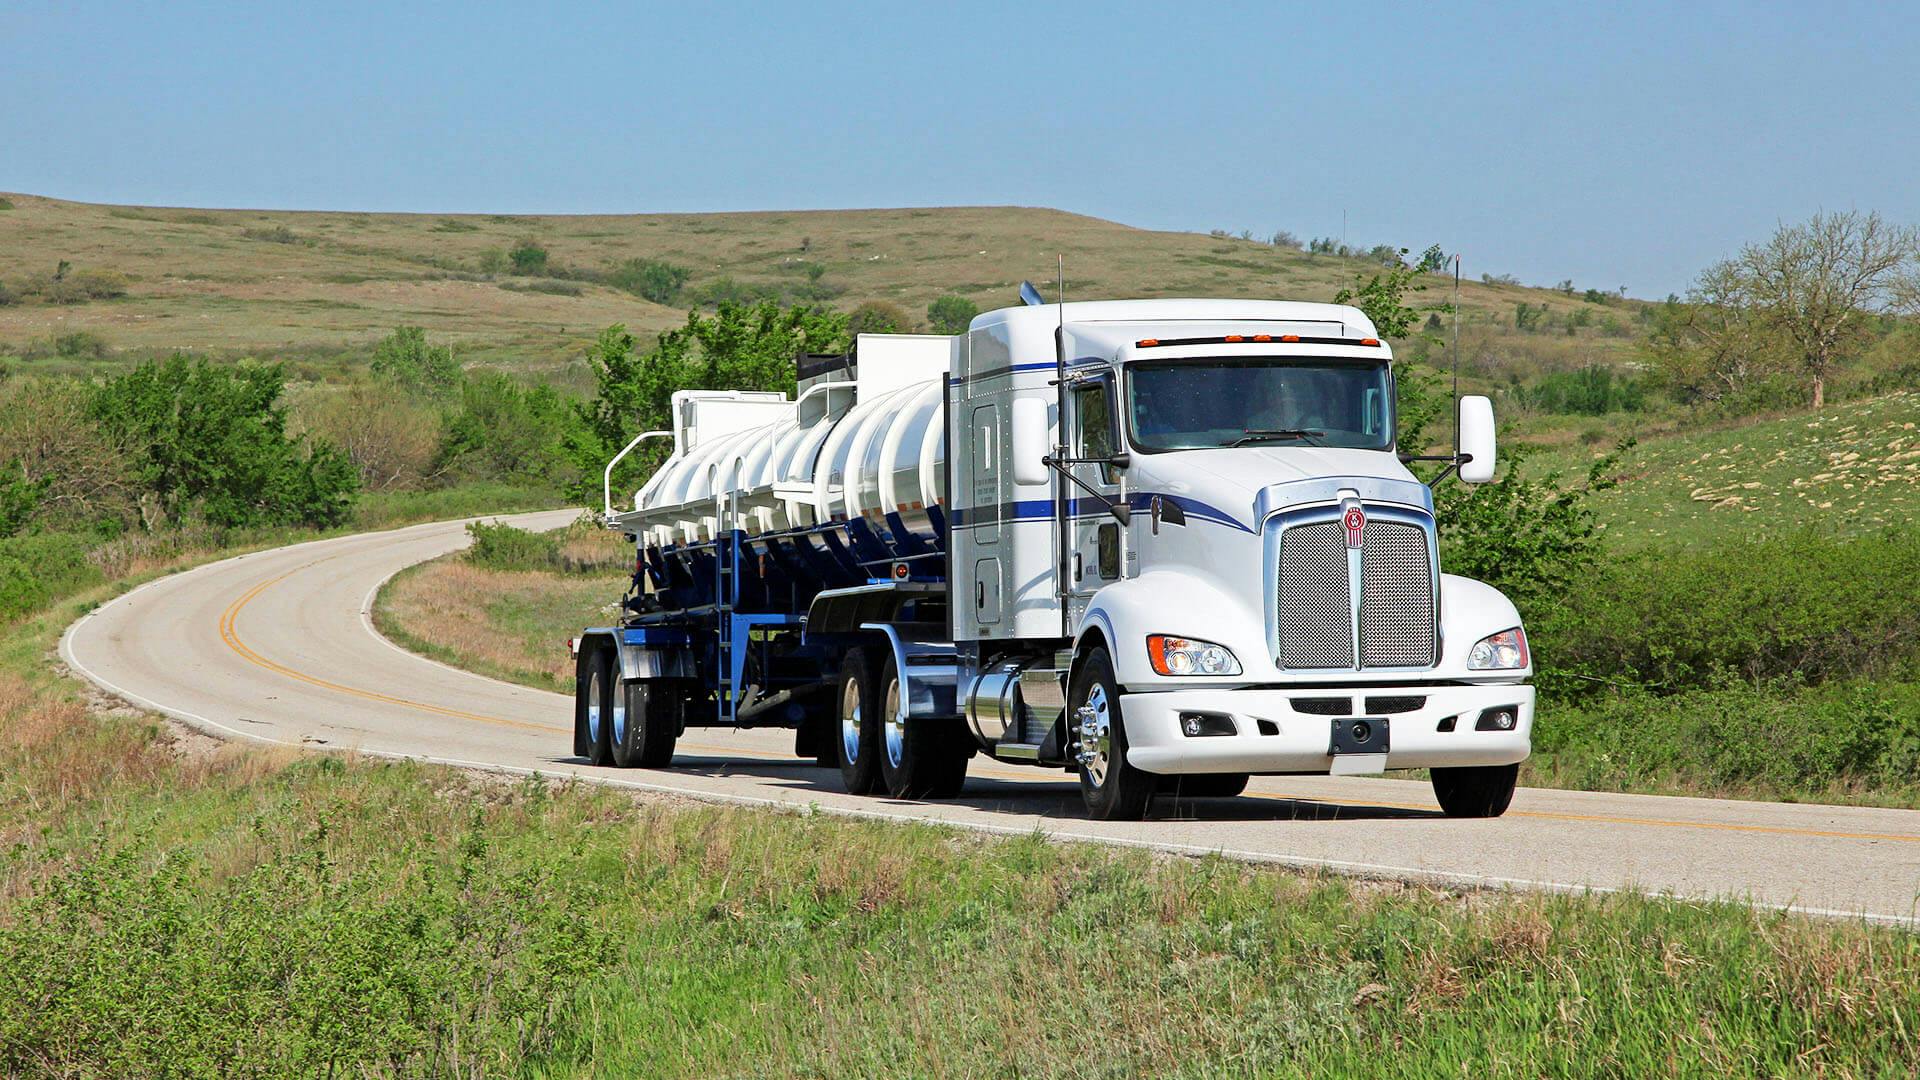 18 wheeler truck driving on road in Wichita